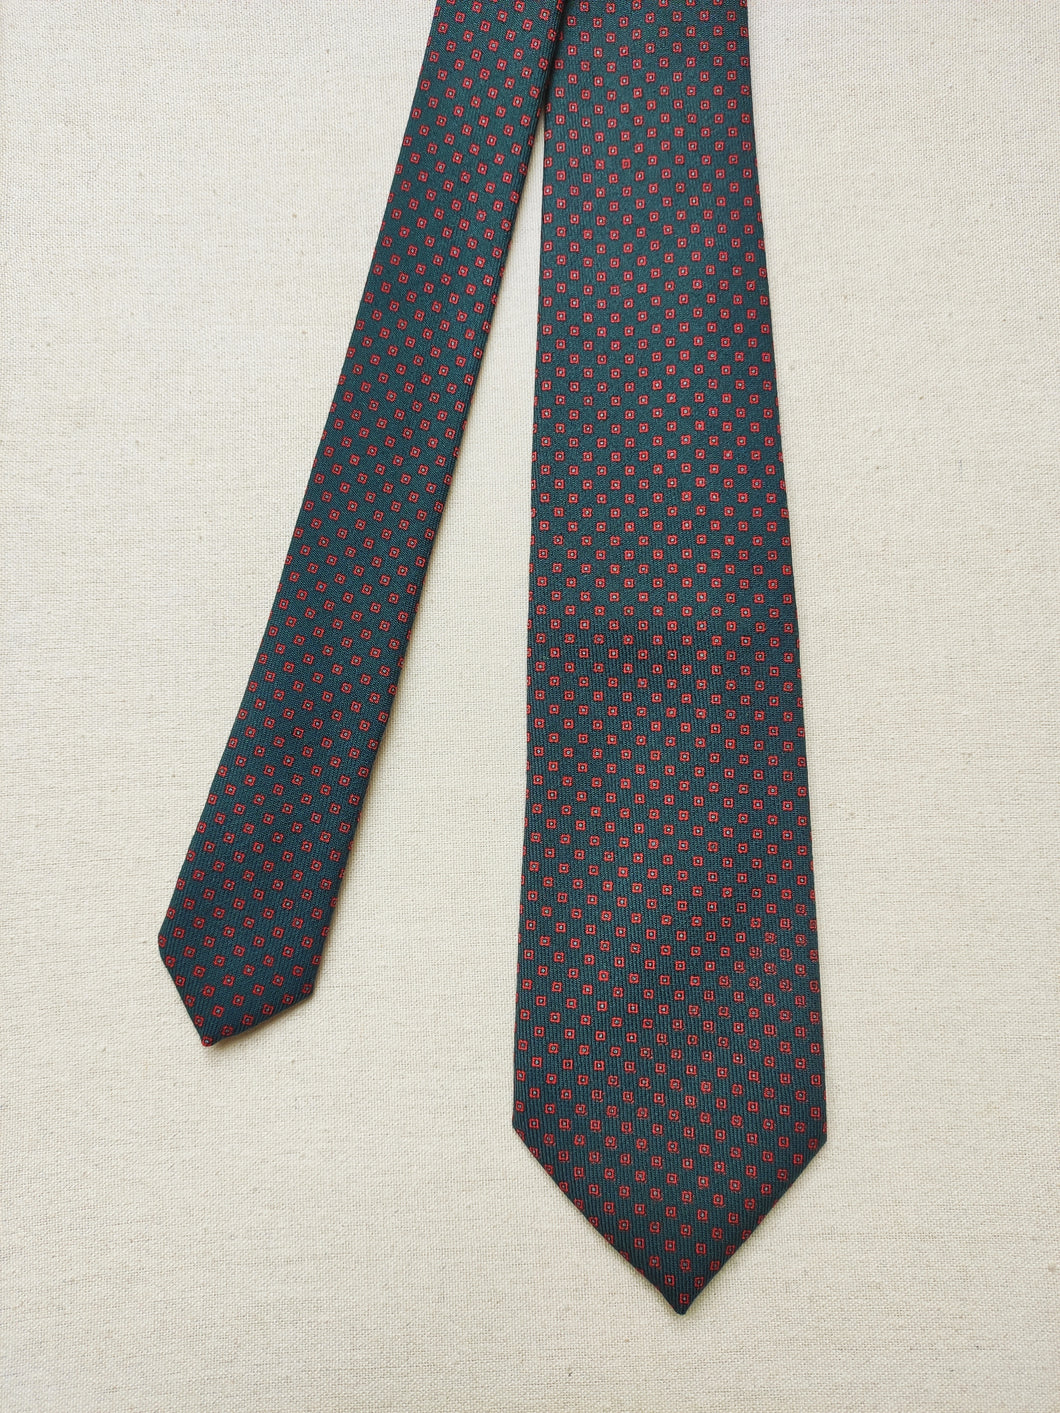 Caleffi Roma X Vivax London cravate verte en laine Made in England